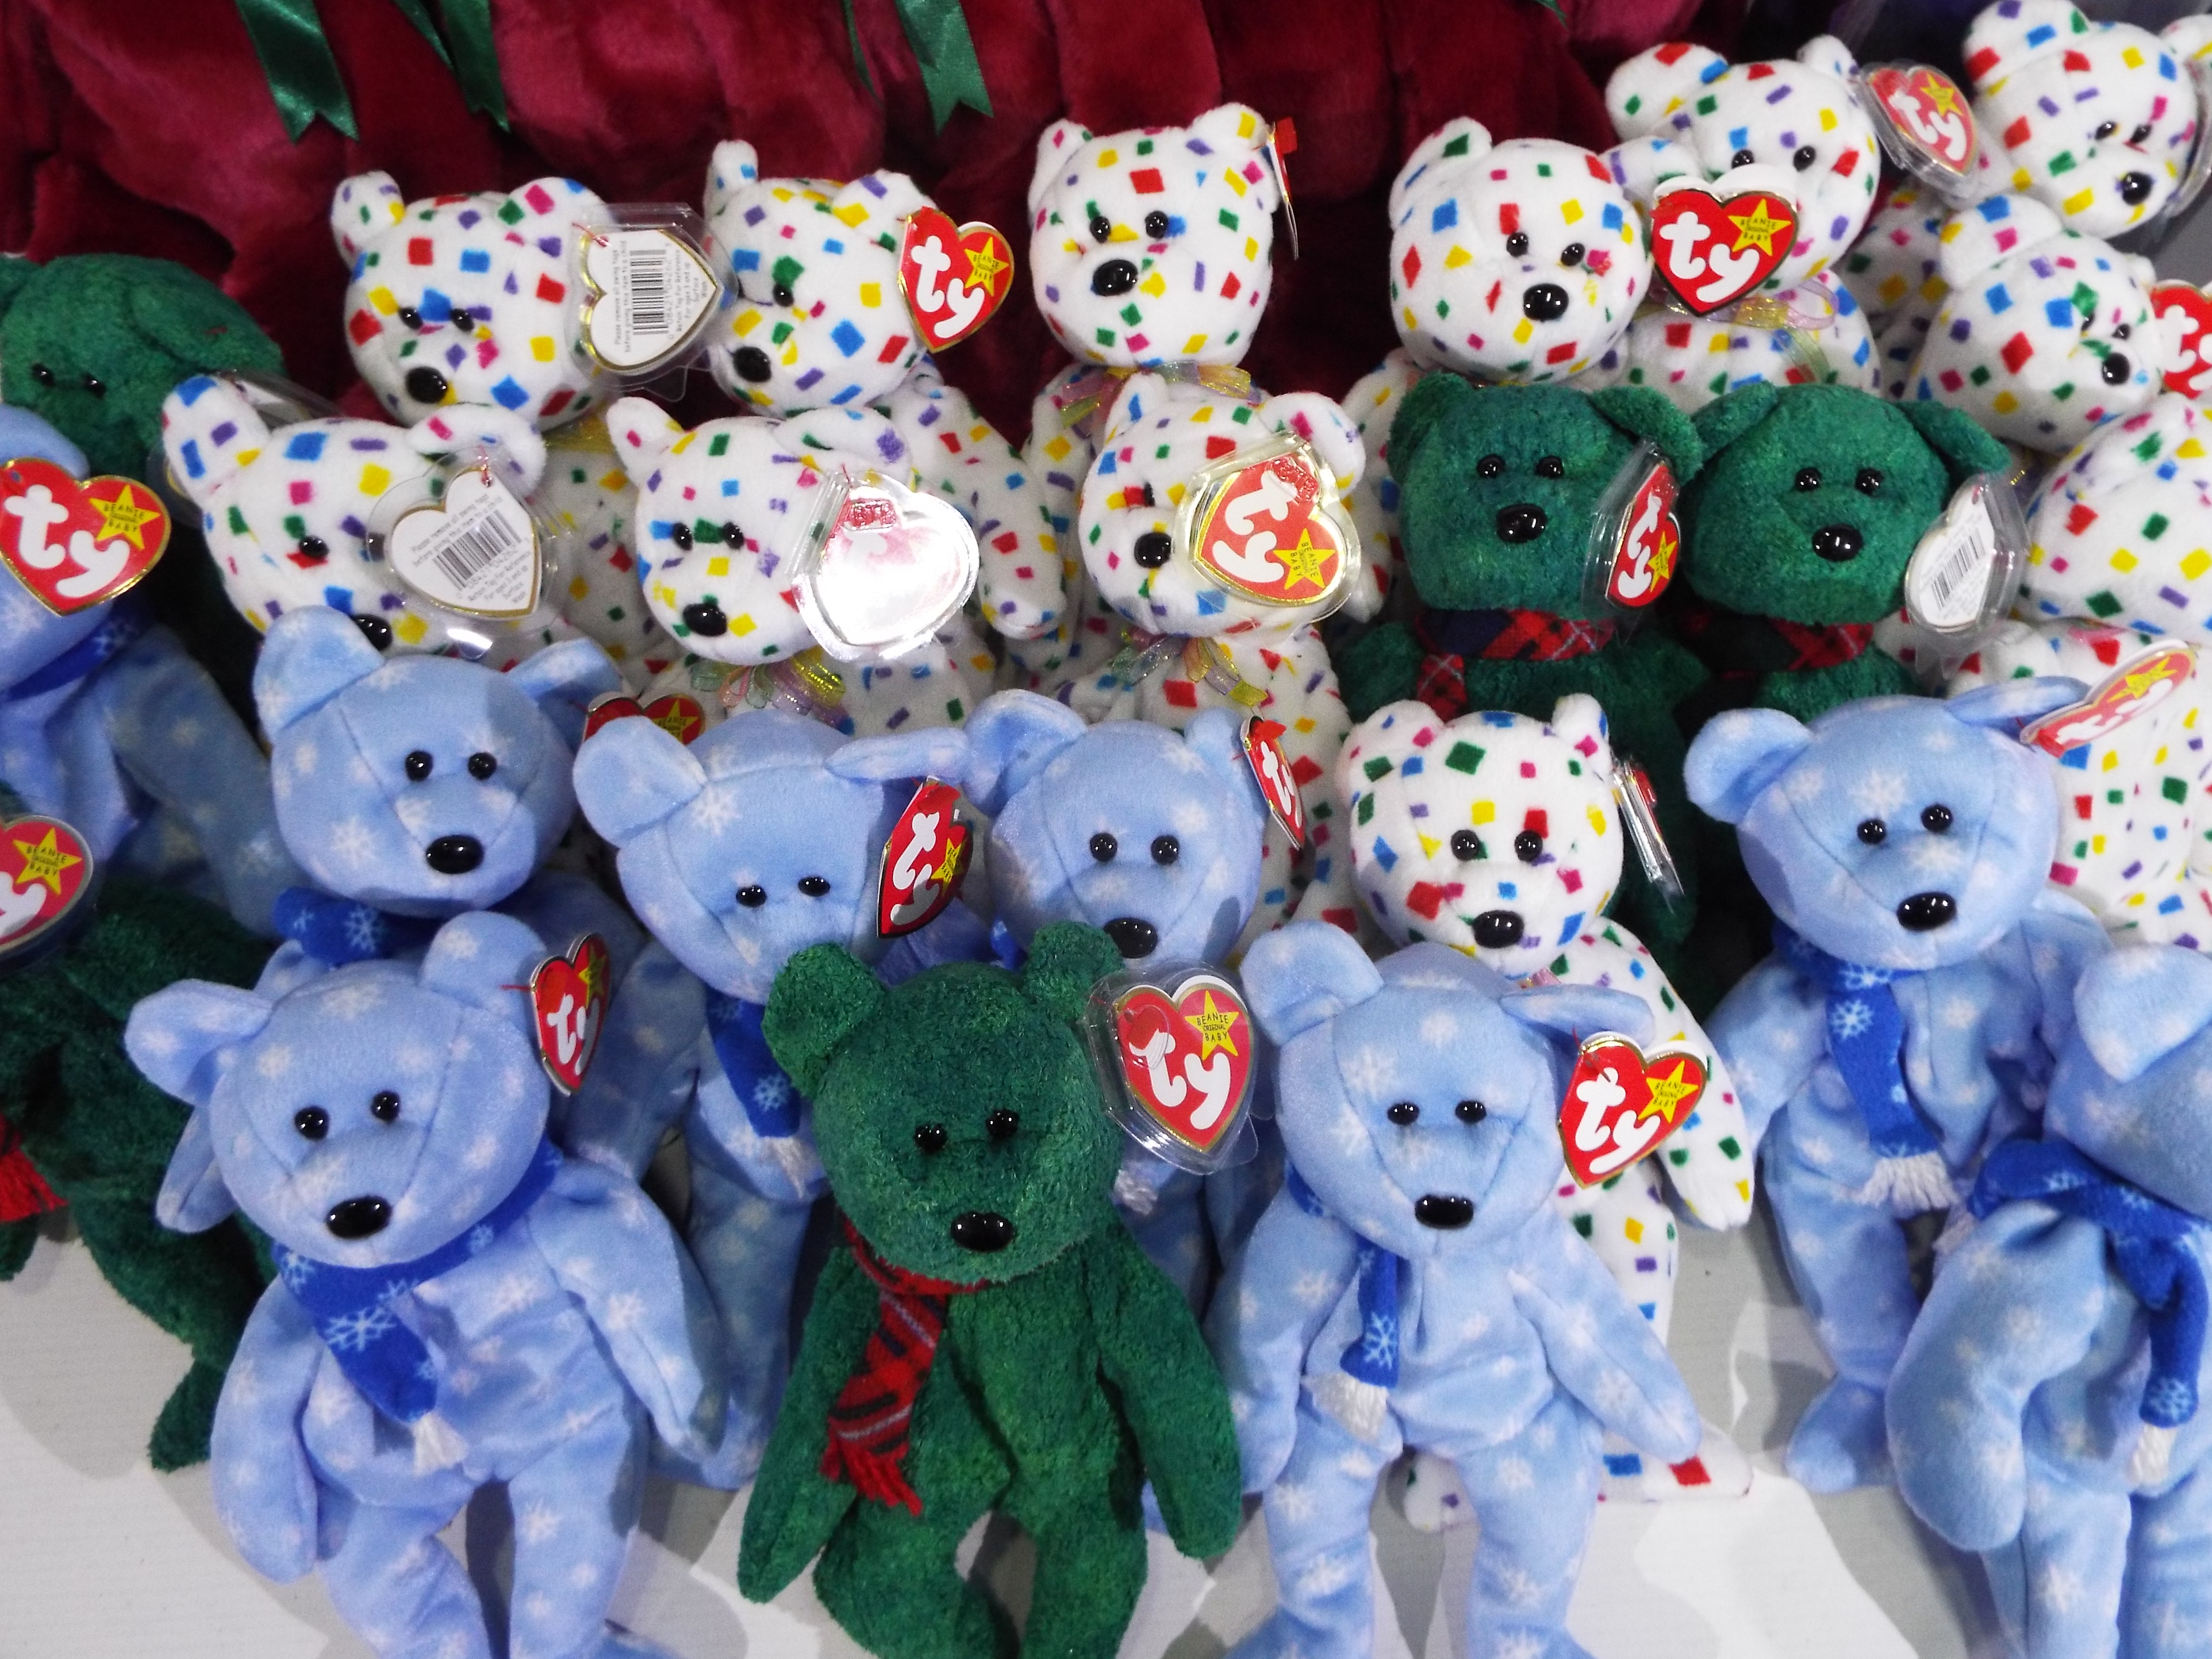 Ty Beanies - 25 x Beanie Babies and 5 x Beanie Buddies - Lot includes 'Teddy' Beanie Buddy bears, - Image 3 of 3